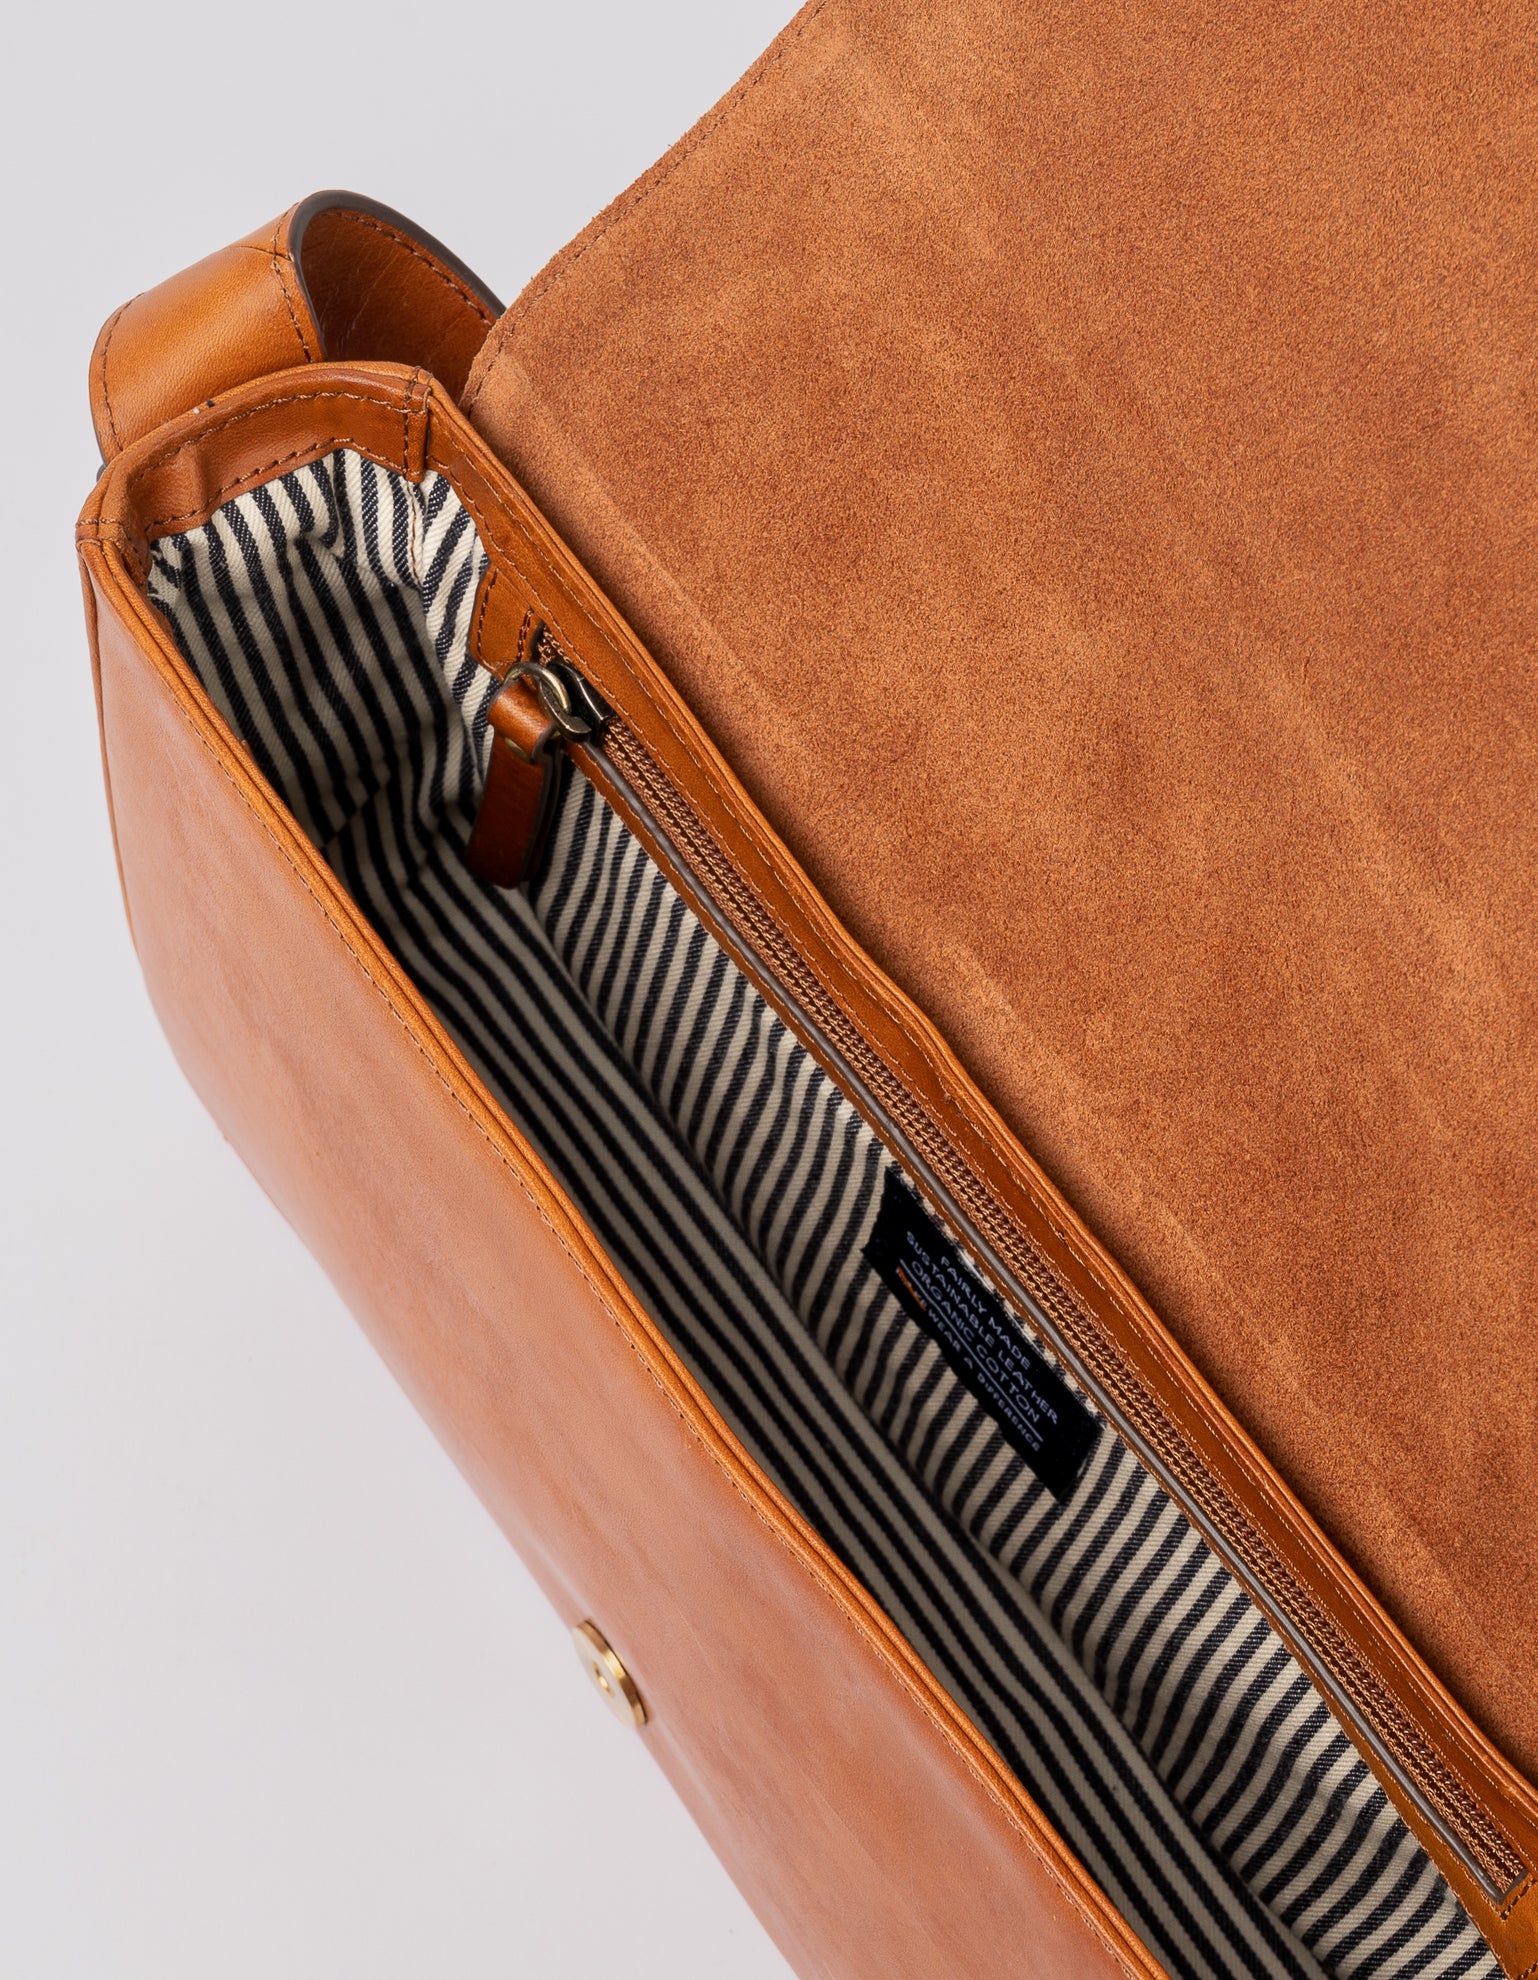 Cognac Baguette Leather womens handbag. Square shape with an adjustable strap. Inside product image.